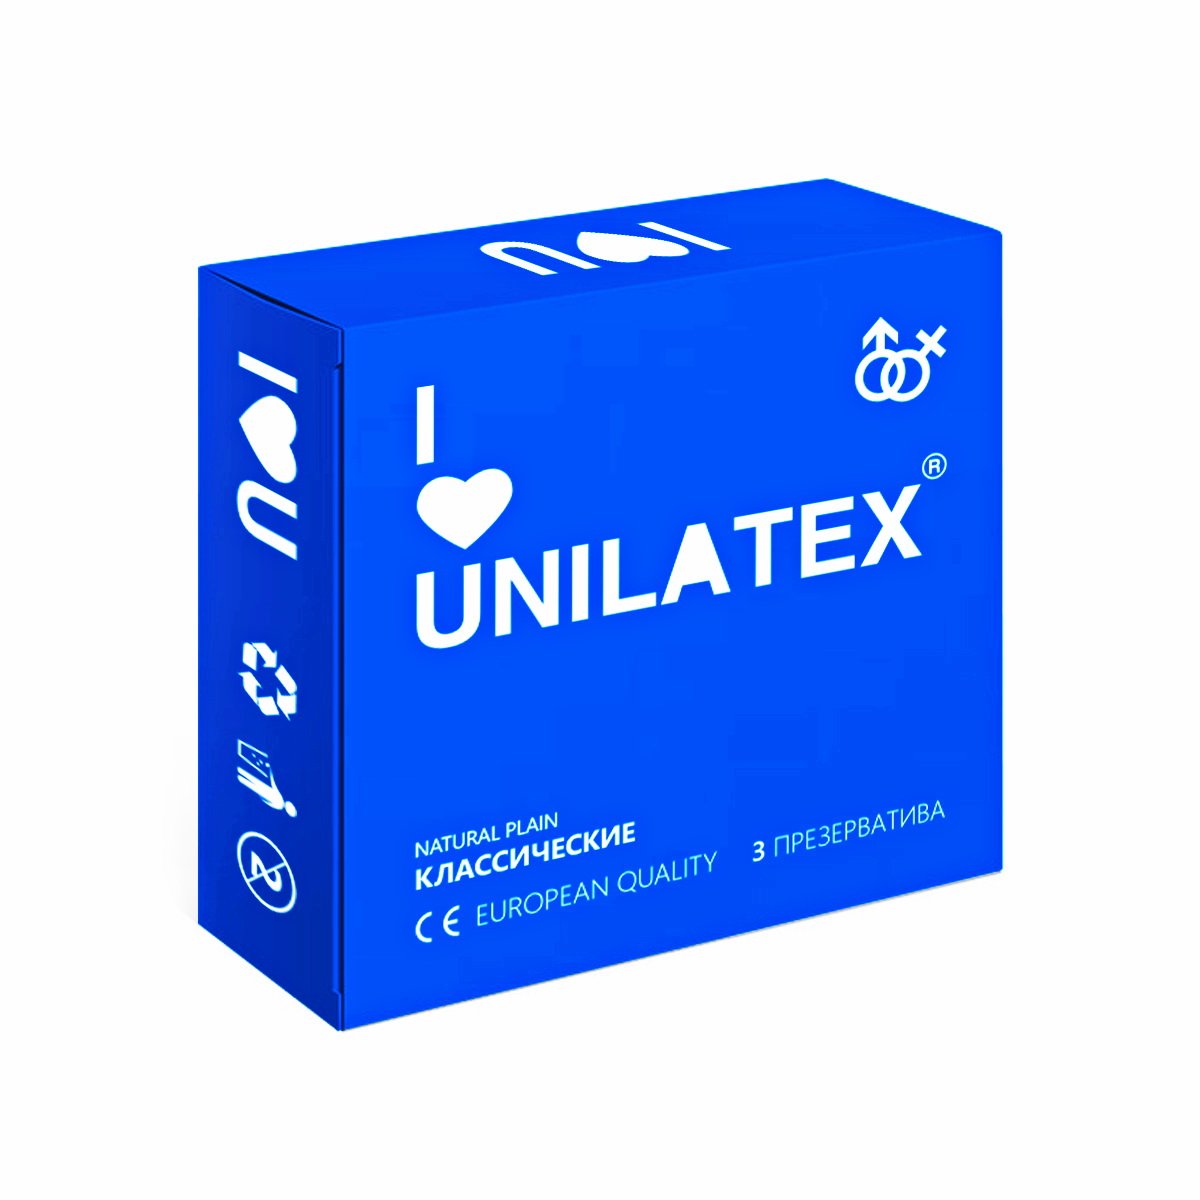 Презервативы гладкие Unilatex® Natural Plain, 3 шт